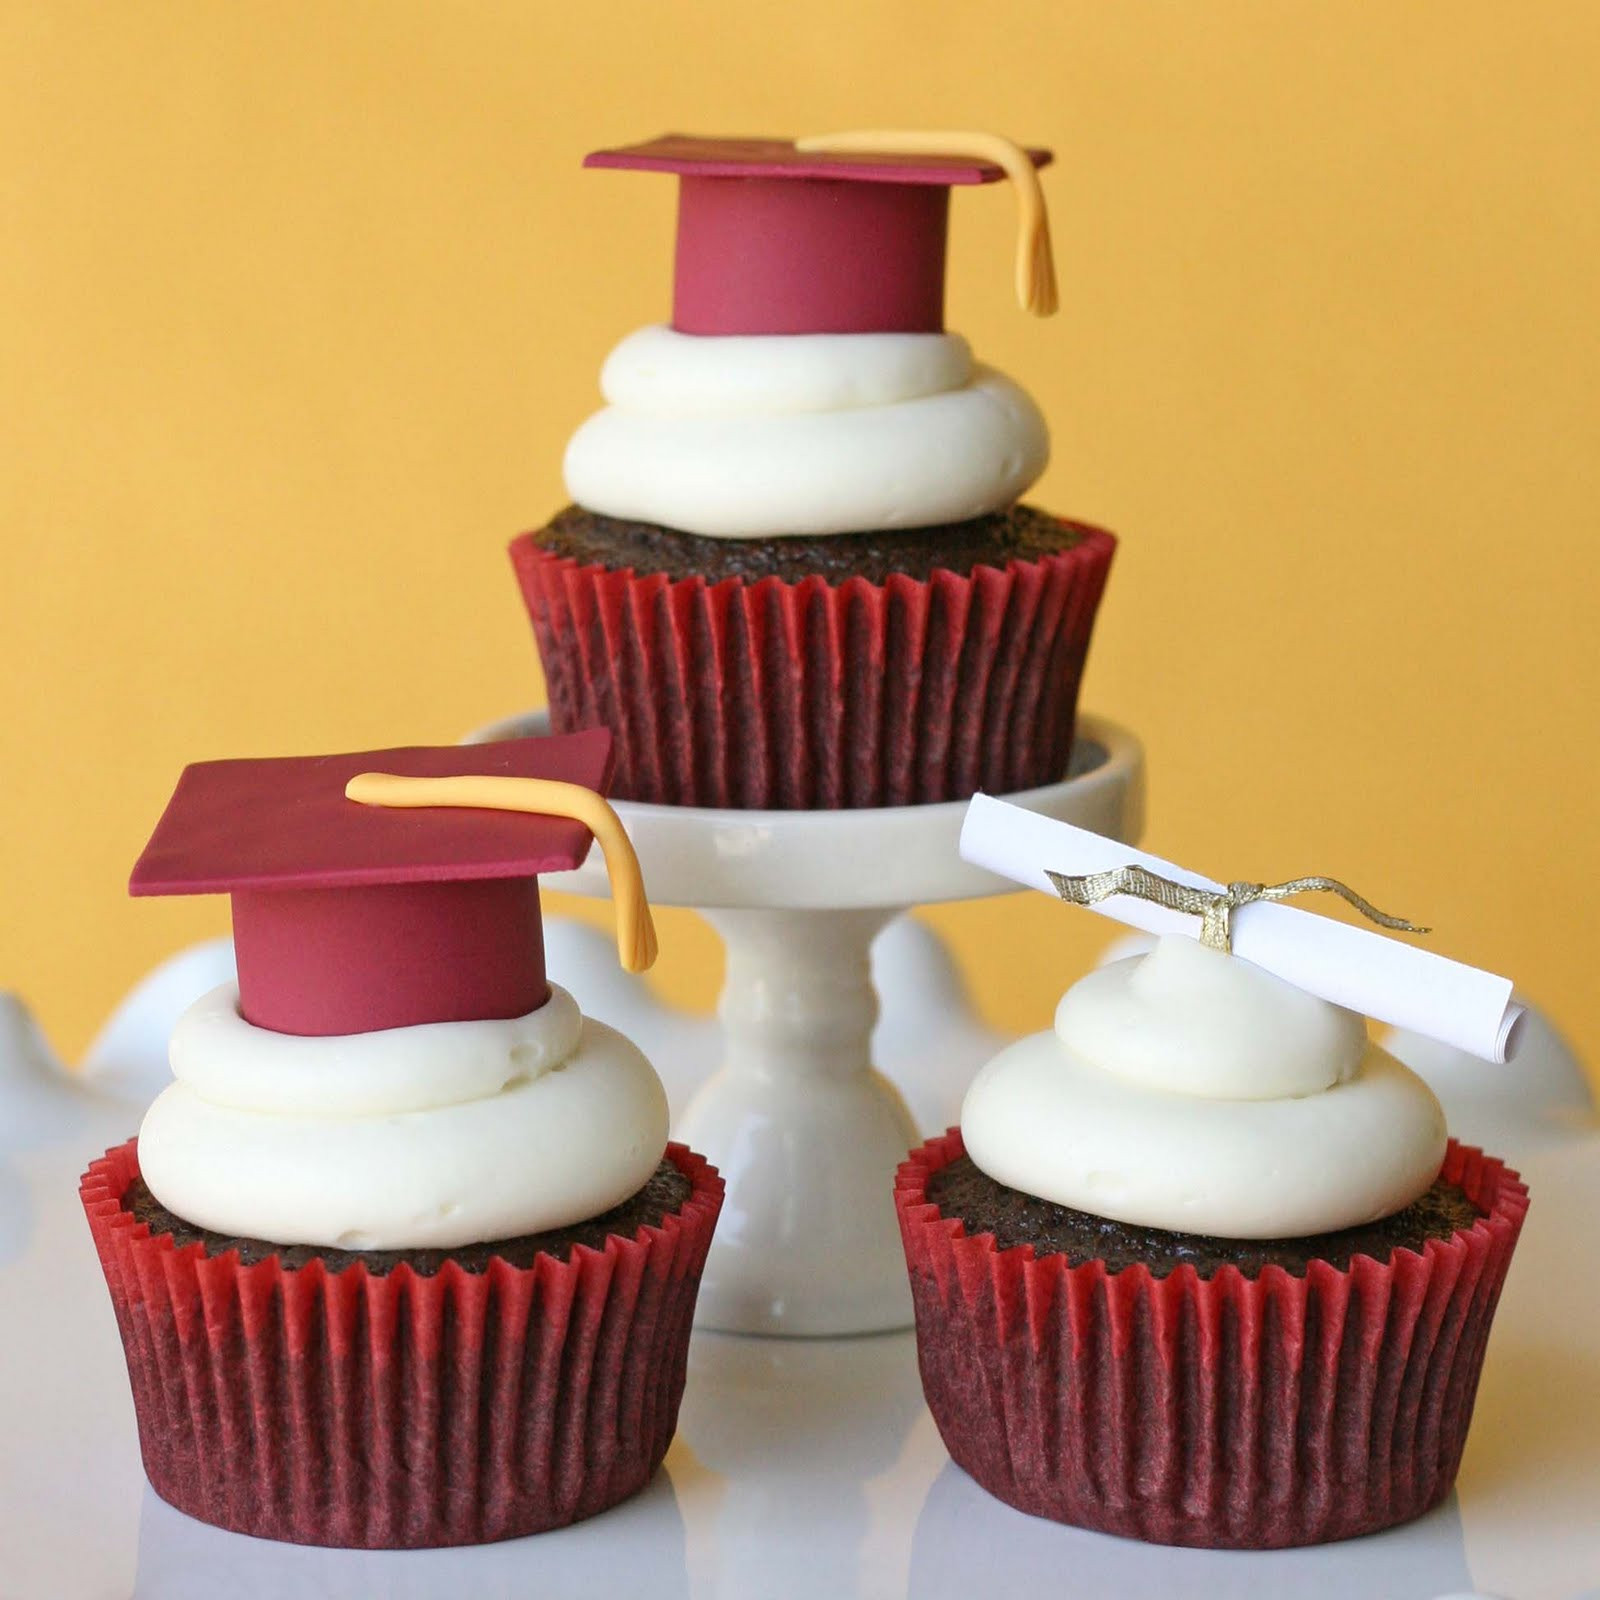 Cupcake Decorating Ideas Graduation Party
 Graduation Cakes – Decoration Ideas